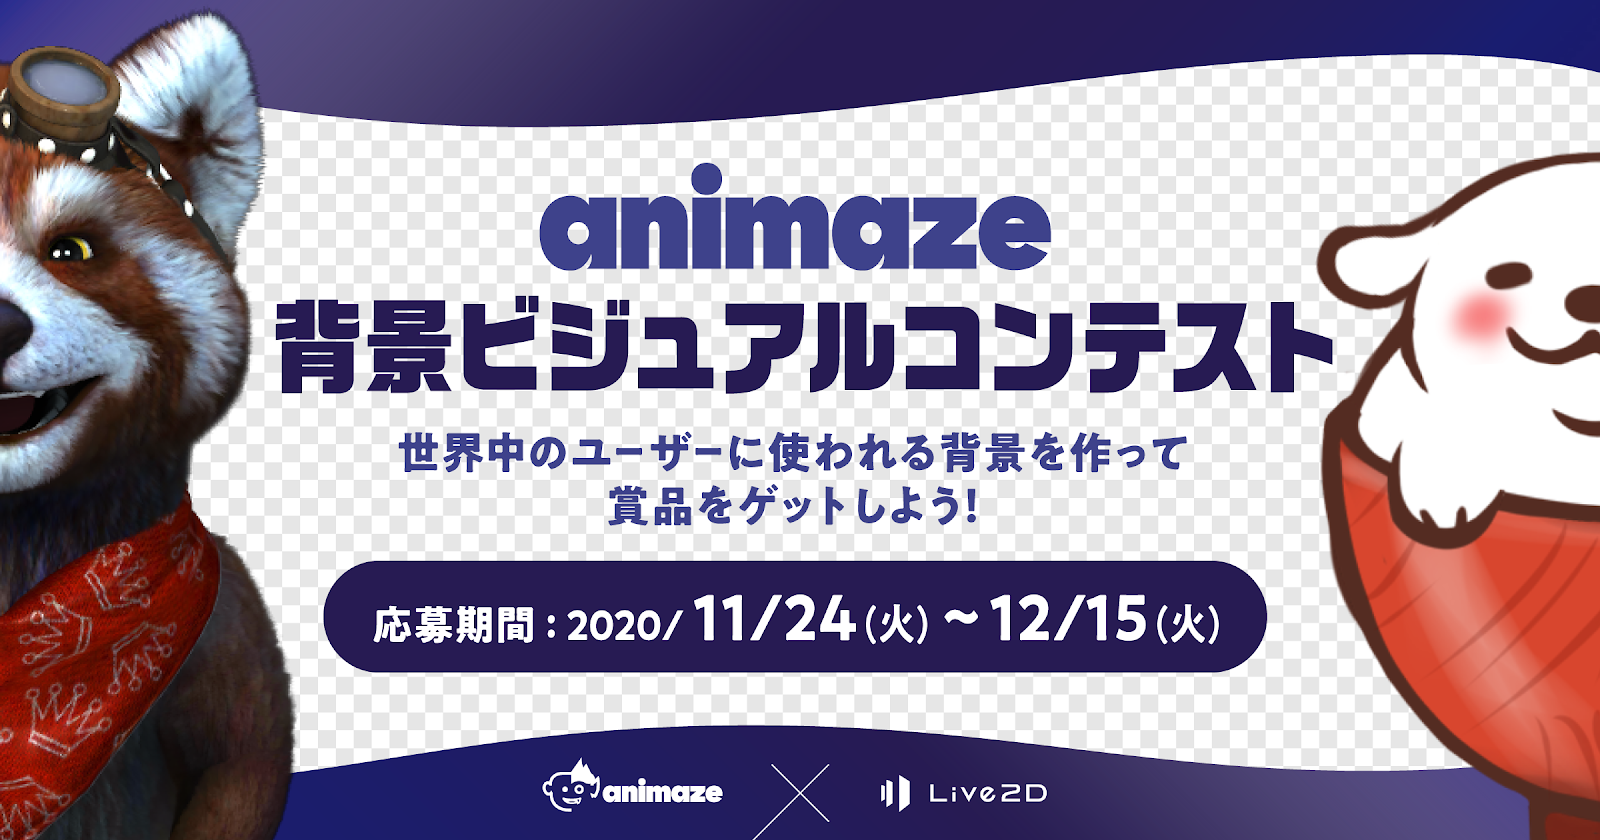 Latest News About Animaze